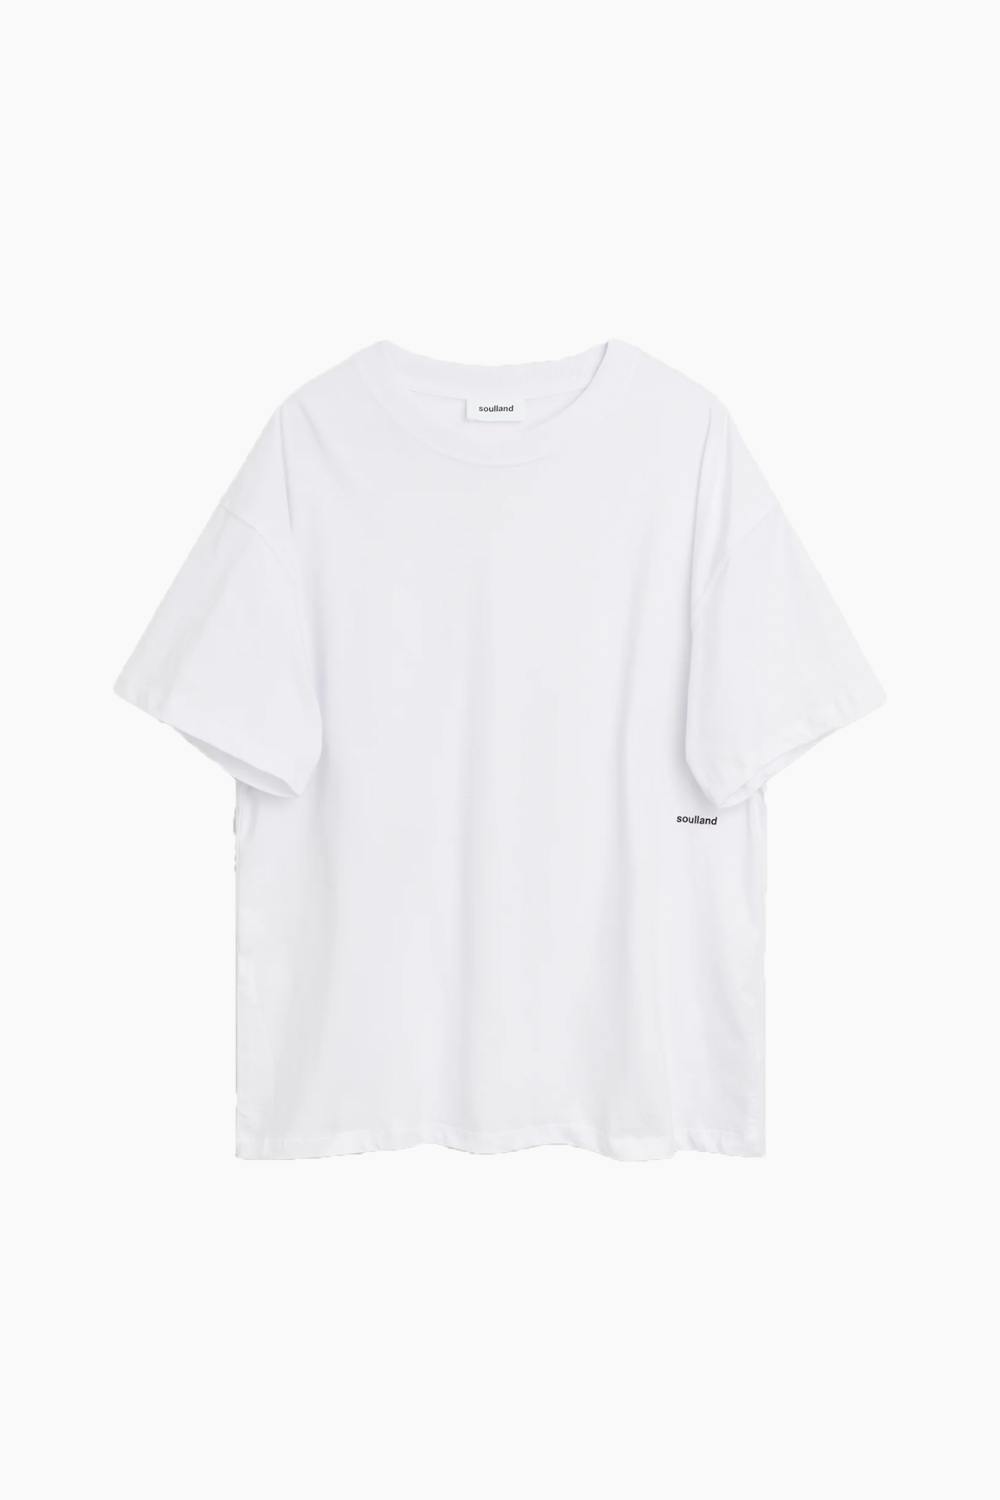 Se Ash T-shirt - White - Soulland - Hvid S/M hos QNTS.dk